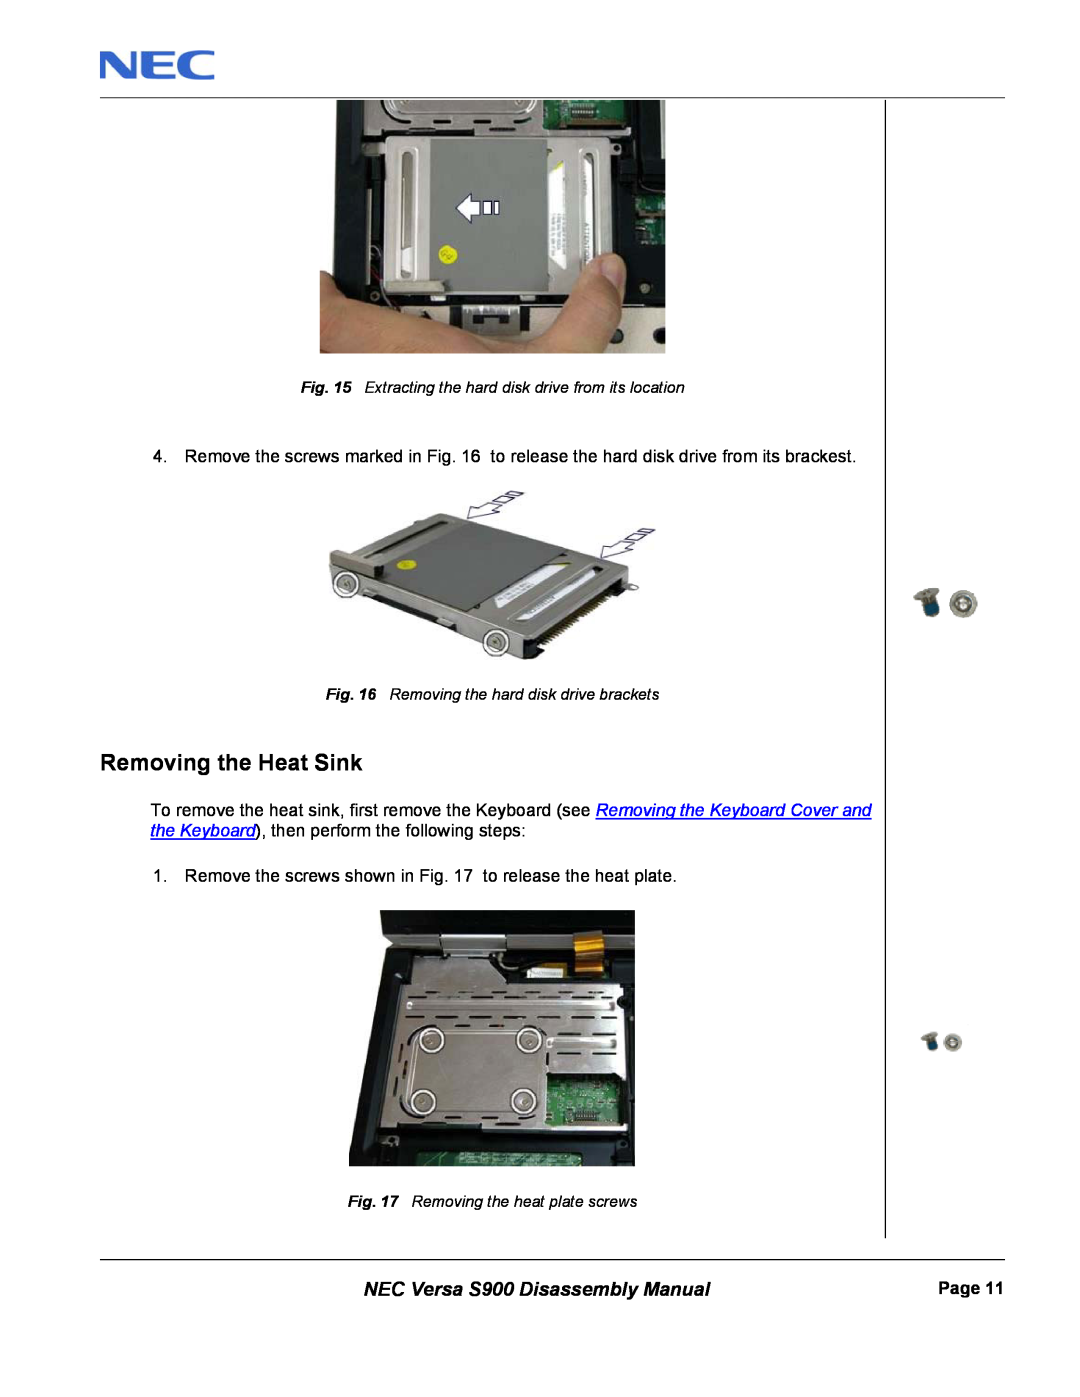 NEC manual Removing the Heat Sink, NEC Versa S900 Disassembly Manual, Removing the hard disk drive brackets 